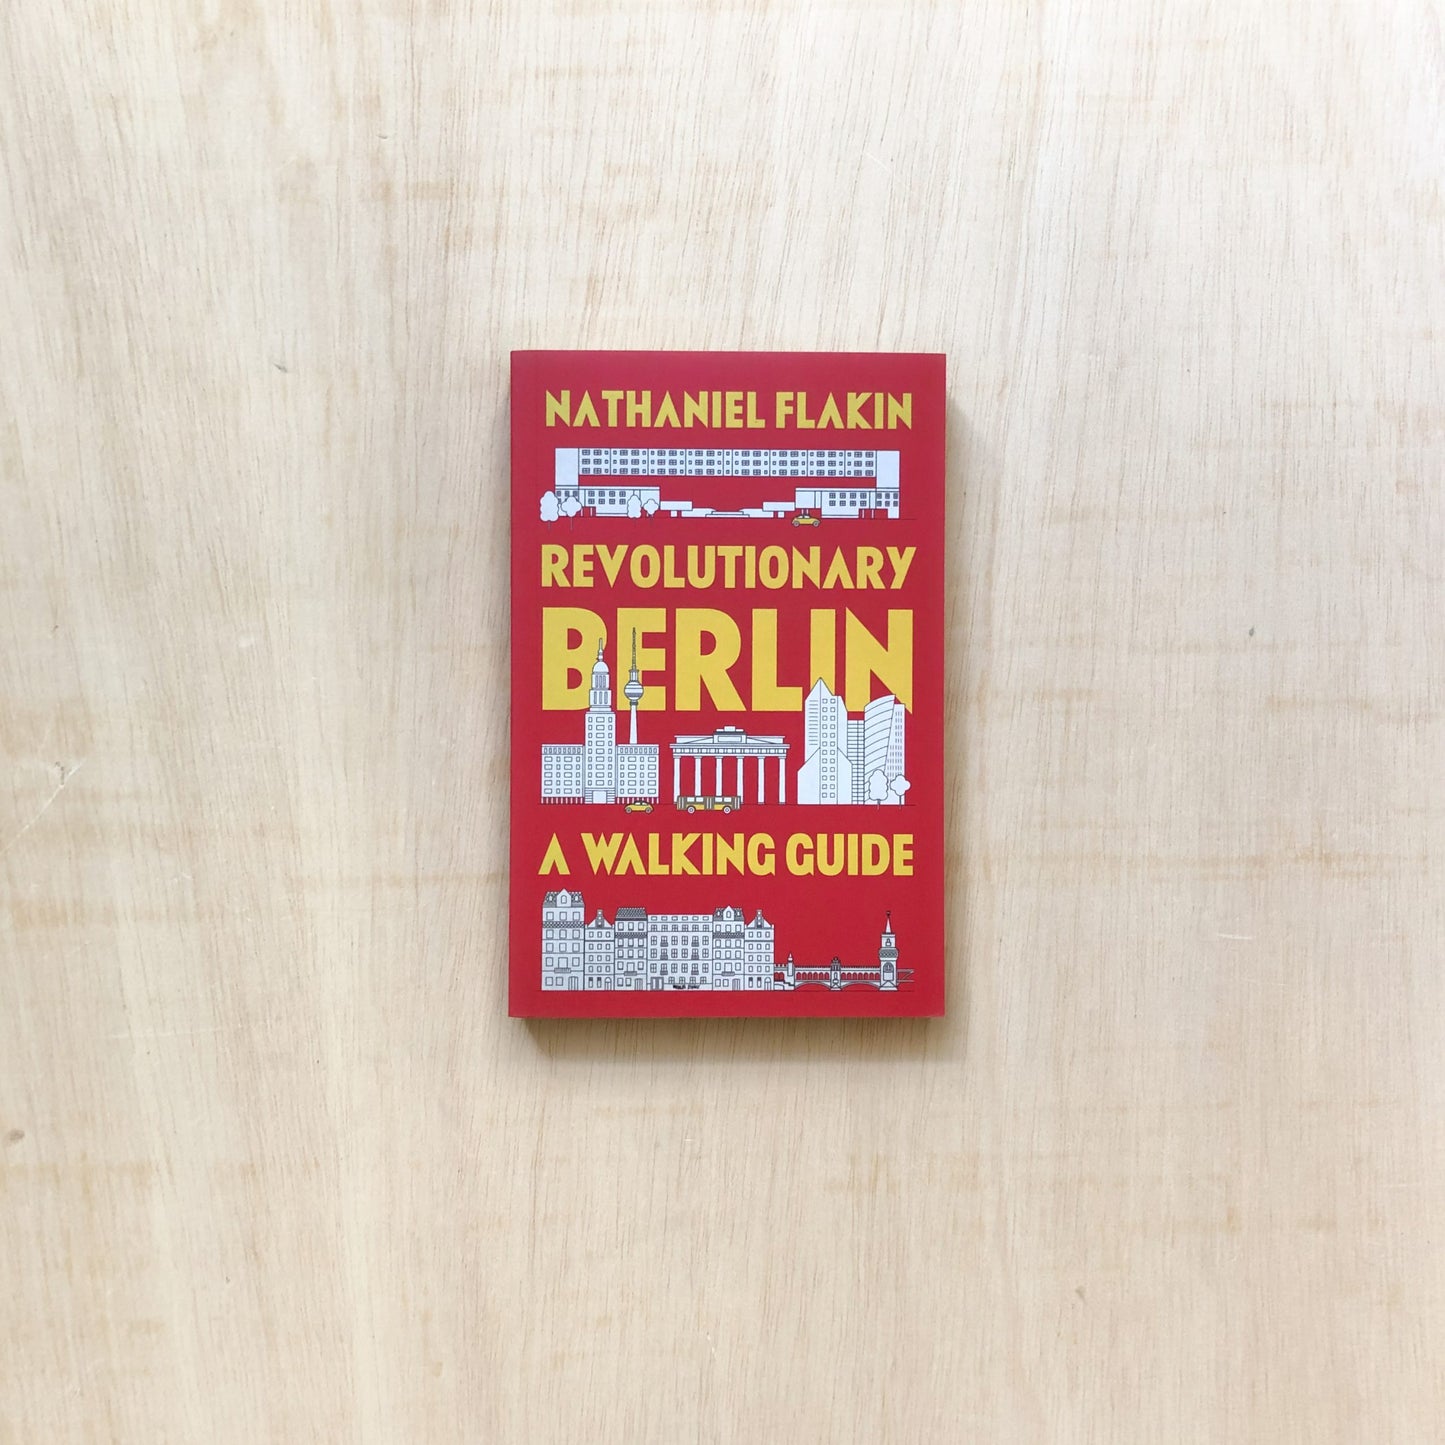 Revolutionary Berlin - A Walking Guide